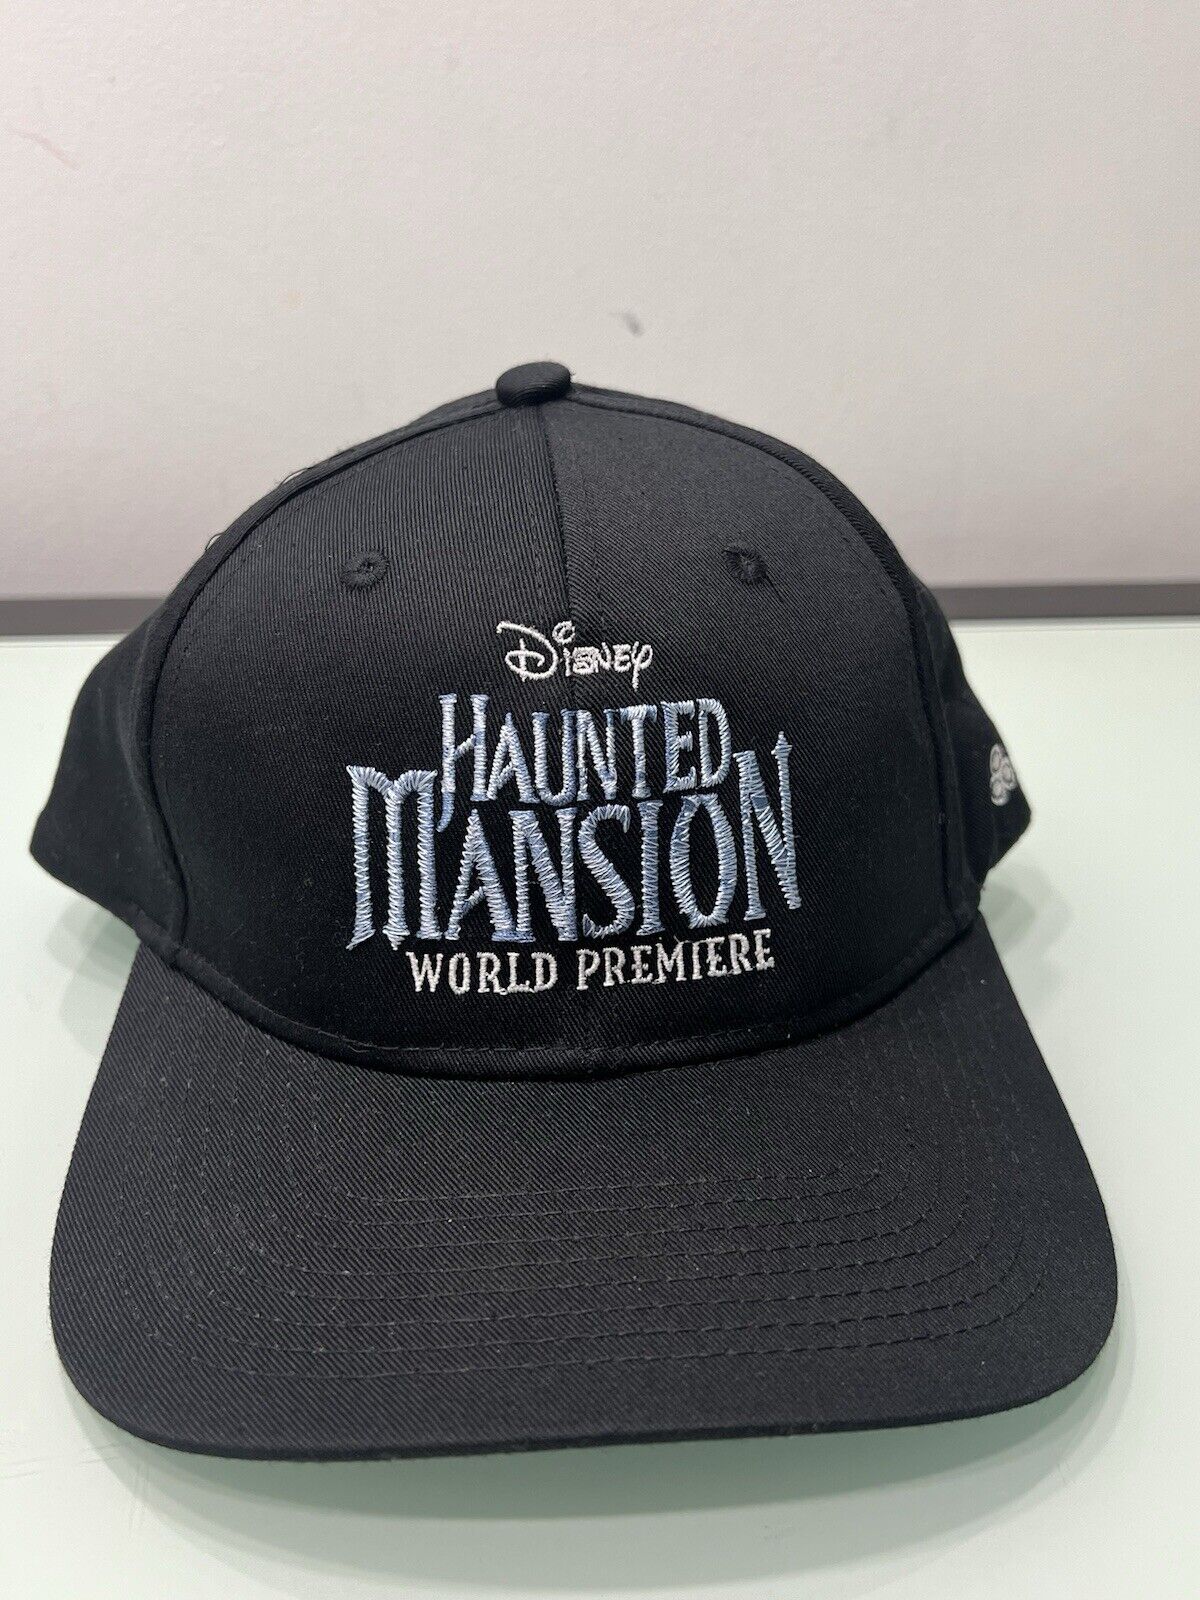 RARE Disneyland Haunted Mansion Movie World Premiere Promo Baseball Cap